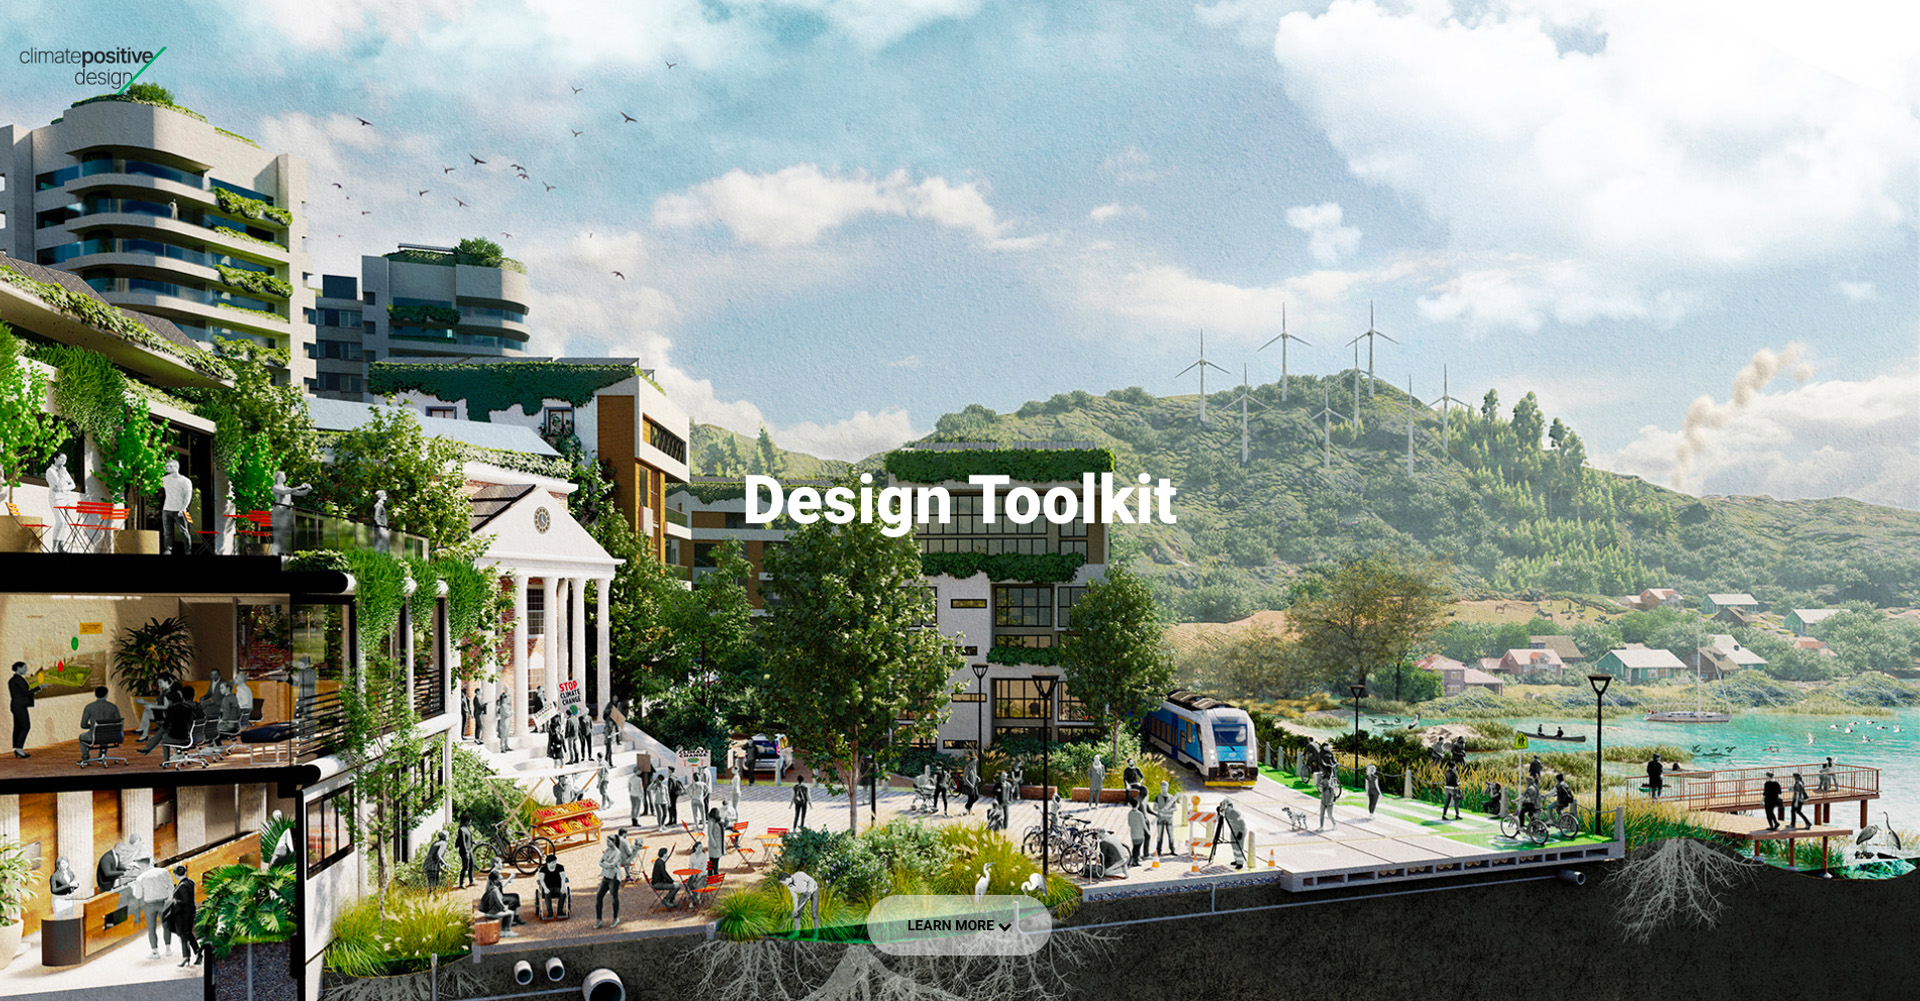 Climate Positive Design - Design Toolkit